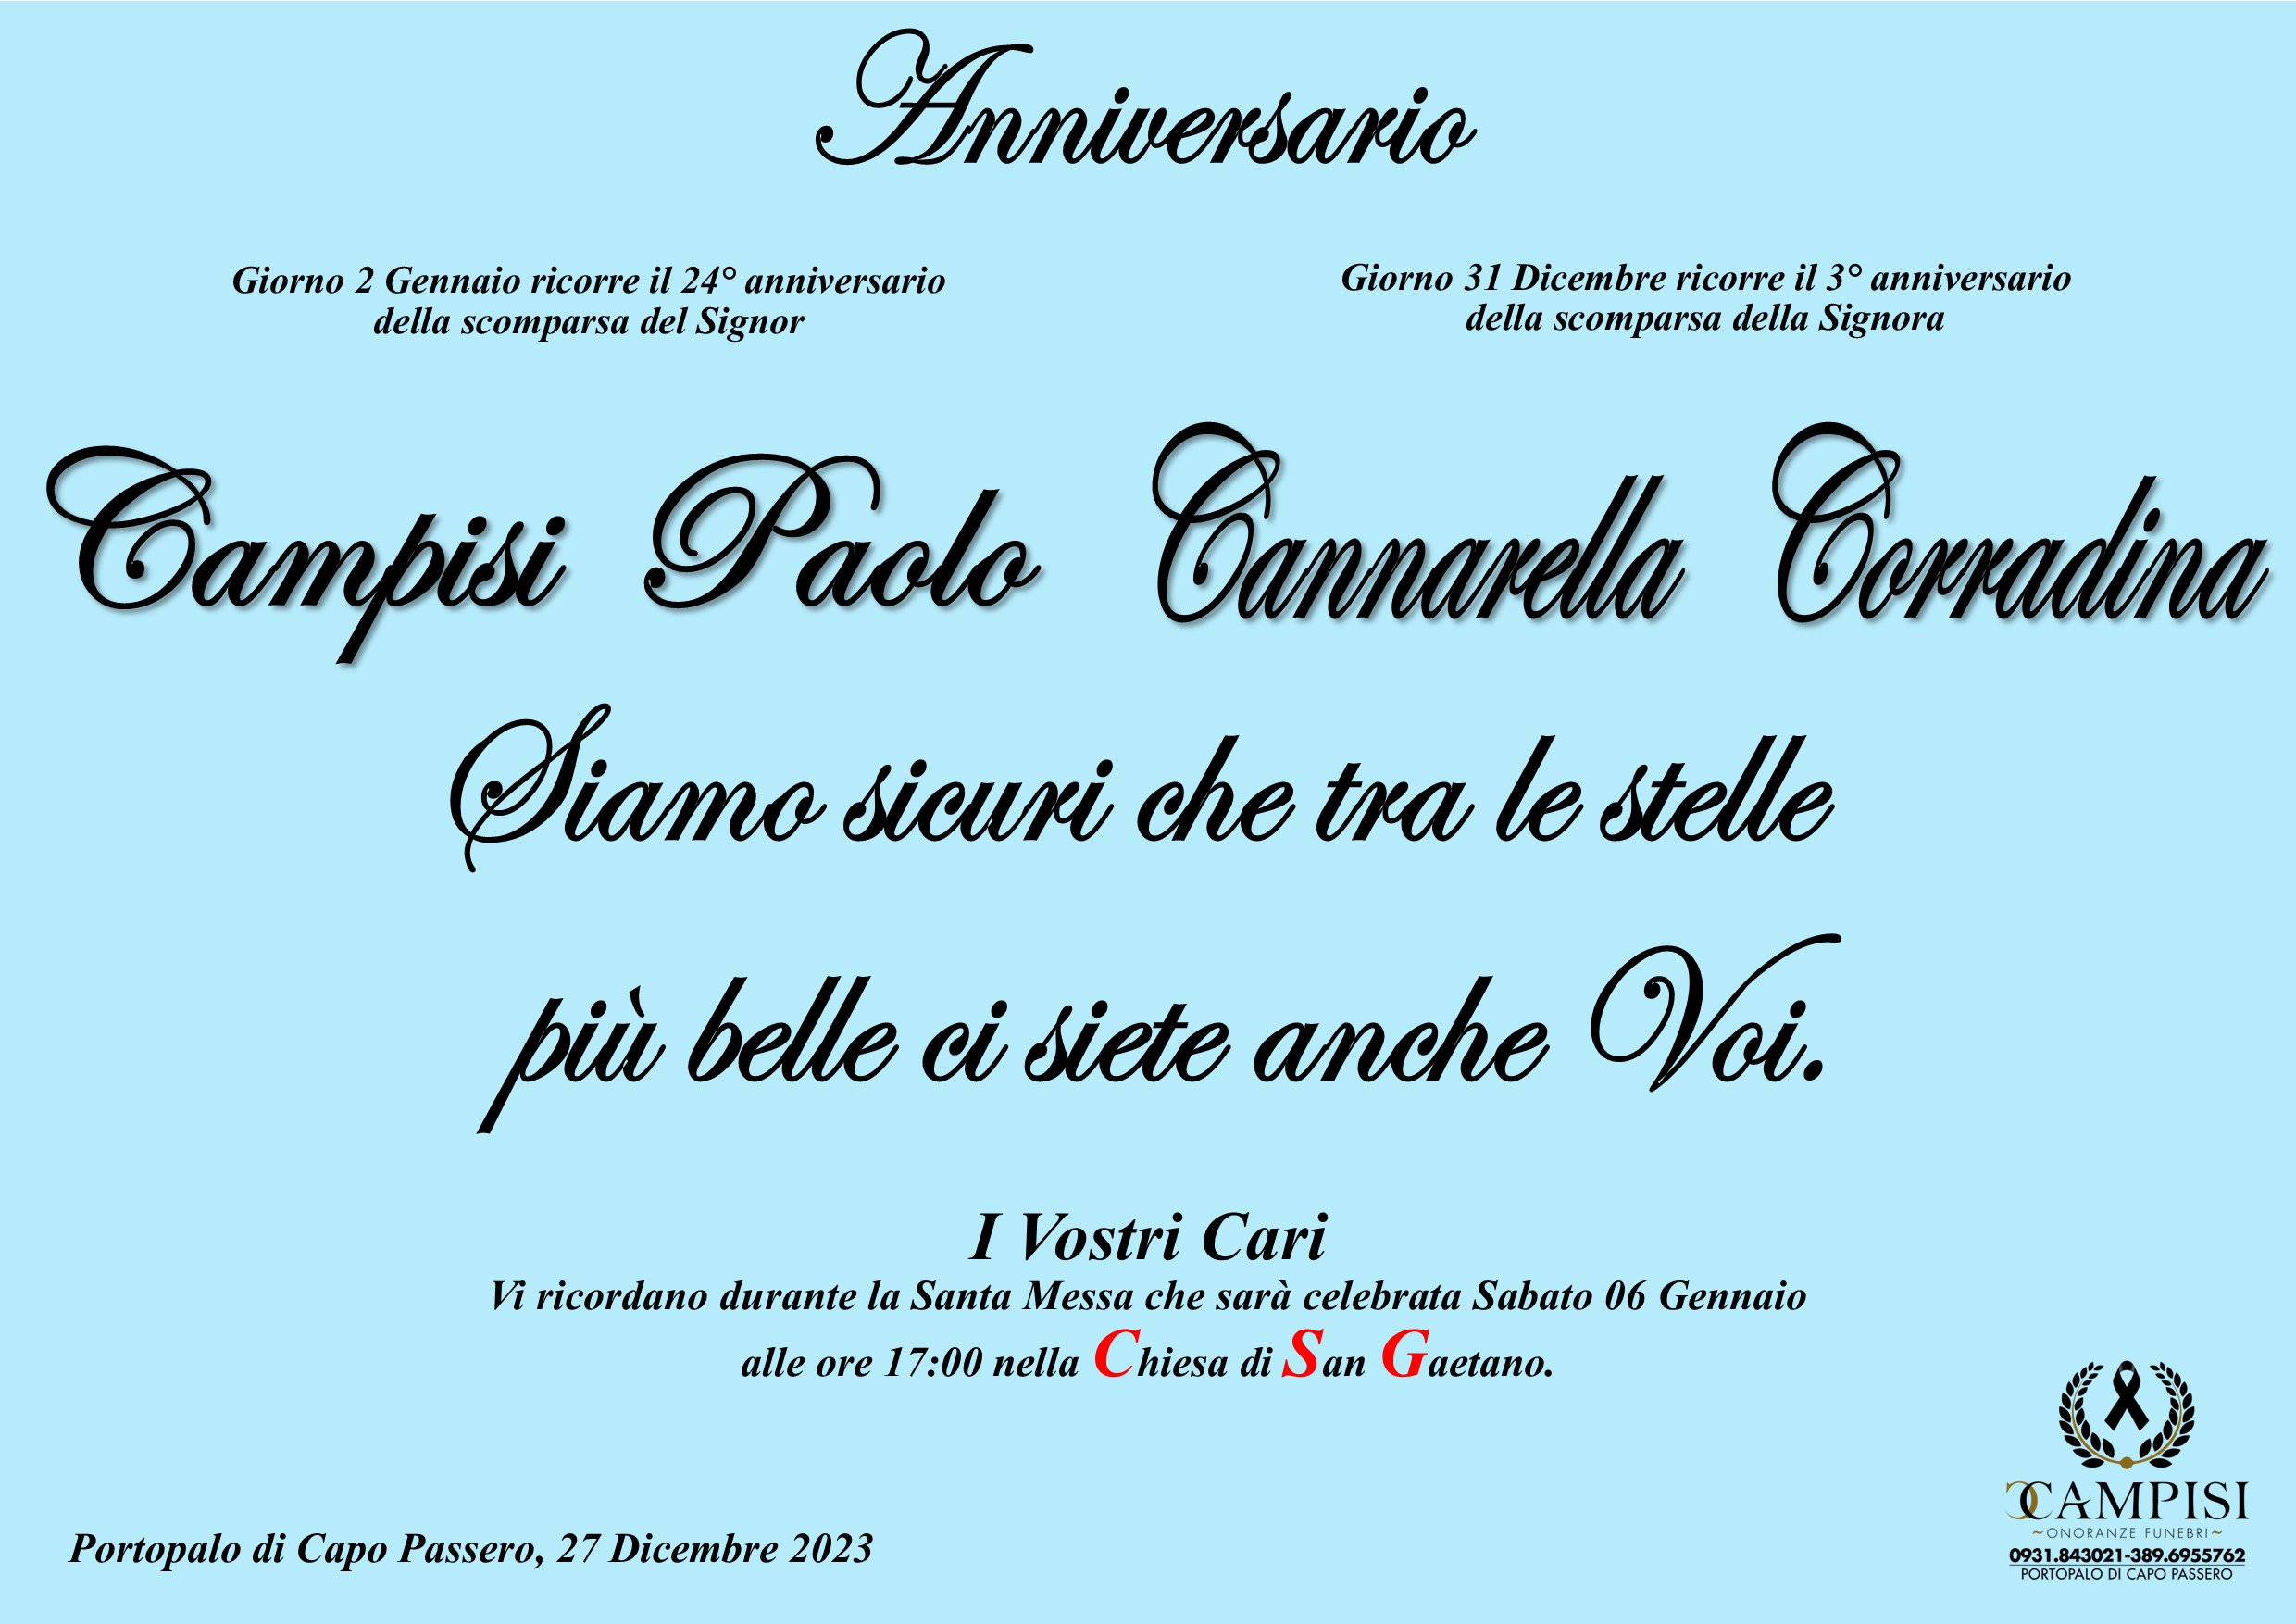 Coniugi Campisi Paolo e Cannarela Corradina